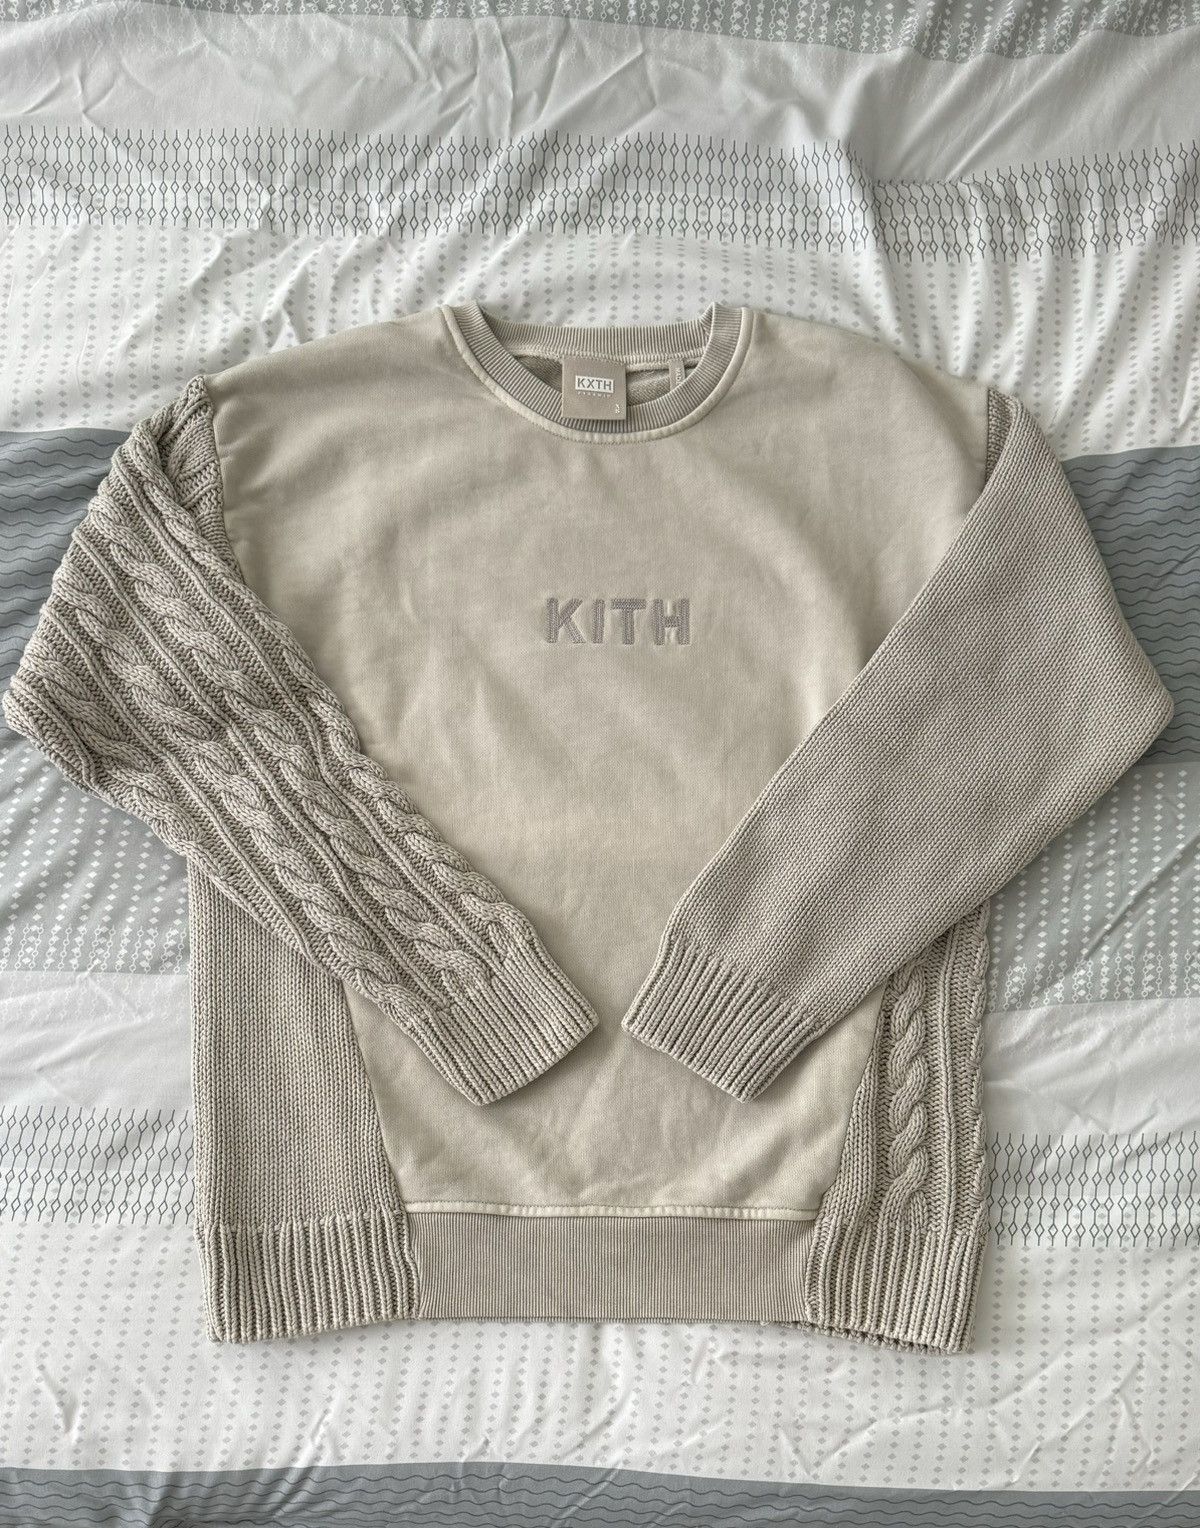 Kith Kith Combo Knit Crewneck Pyramid | Grailed